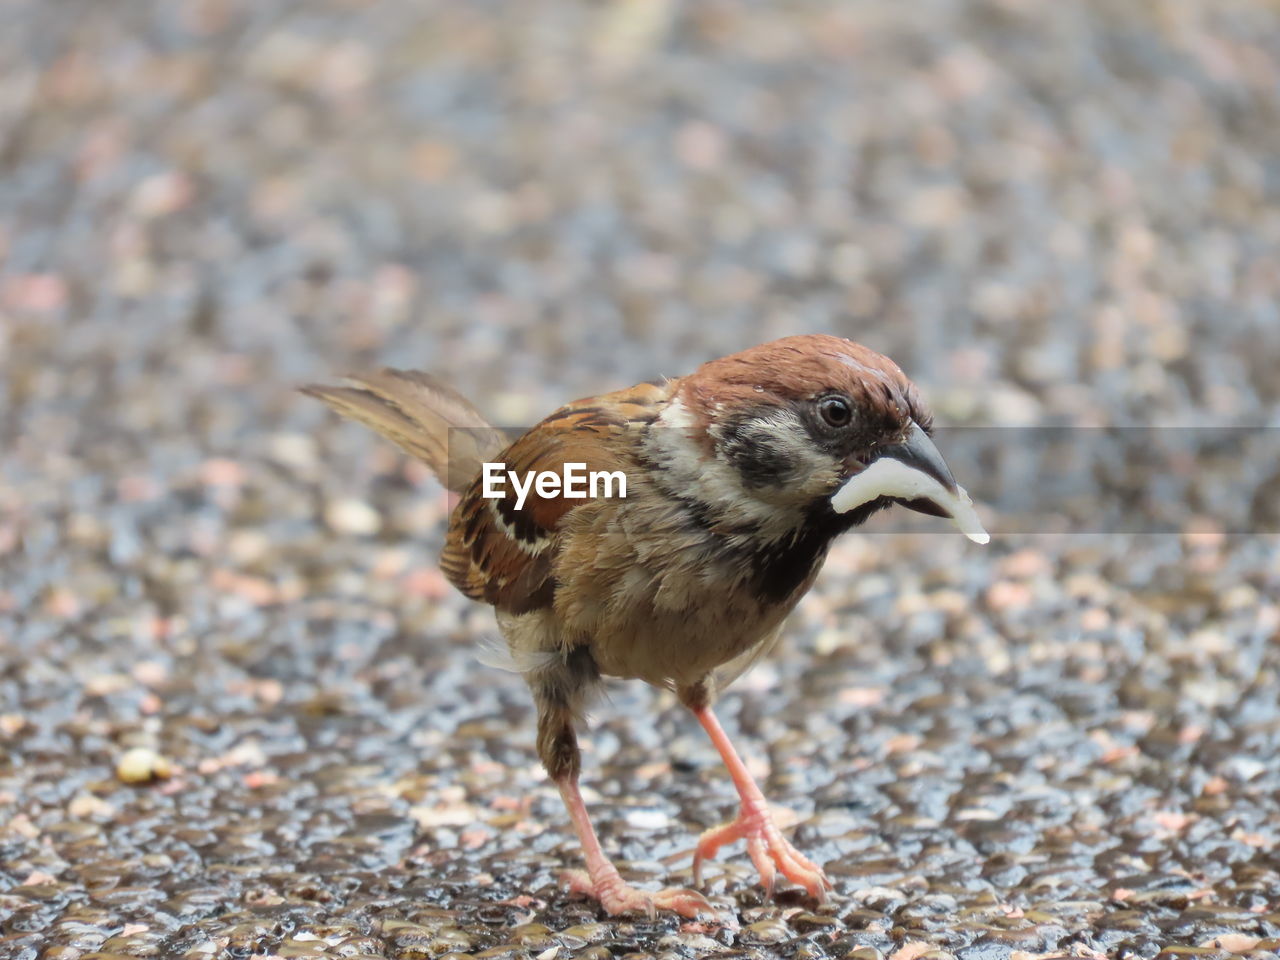 A lovely portrait of a little sparrow